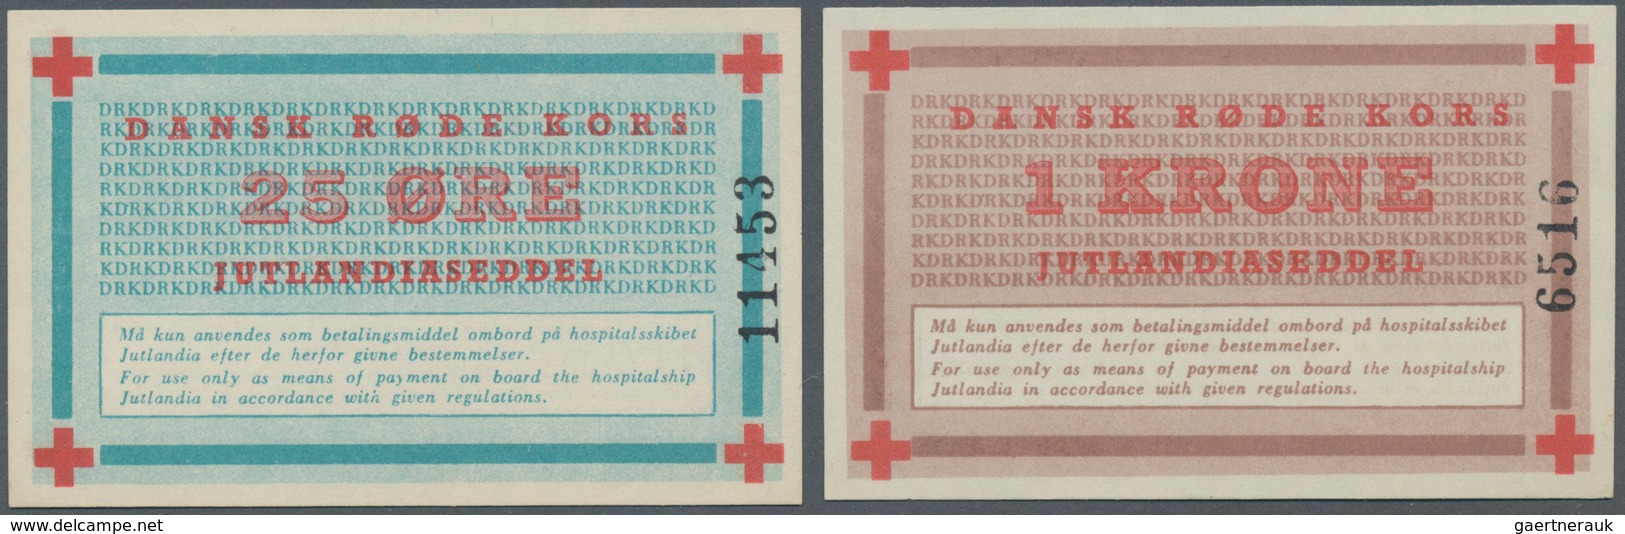 Denmark  / Dänemark: Jutland Notgeld Set With 3 Pcs. 25 Oere, 1 And 5 Kroner ND, P.NL In UNC Conditi - Danemark